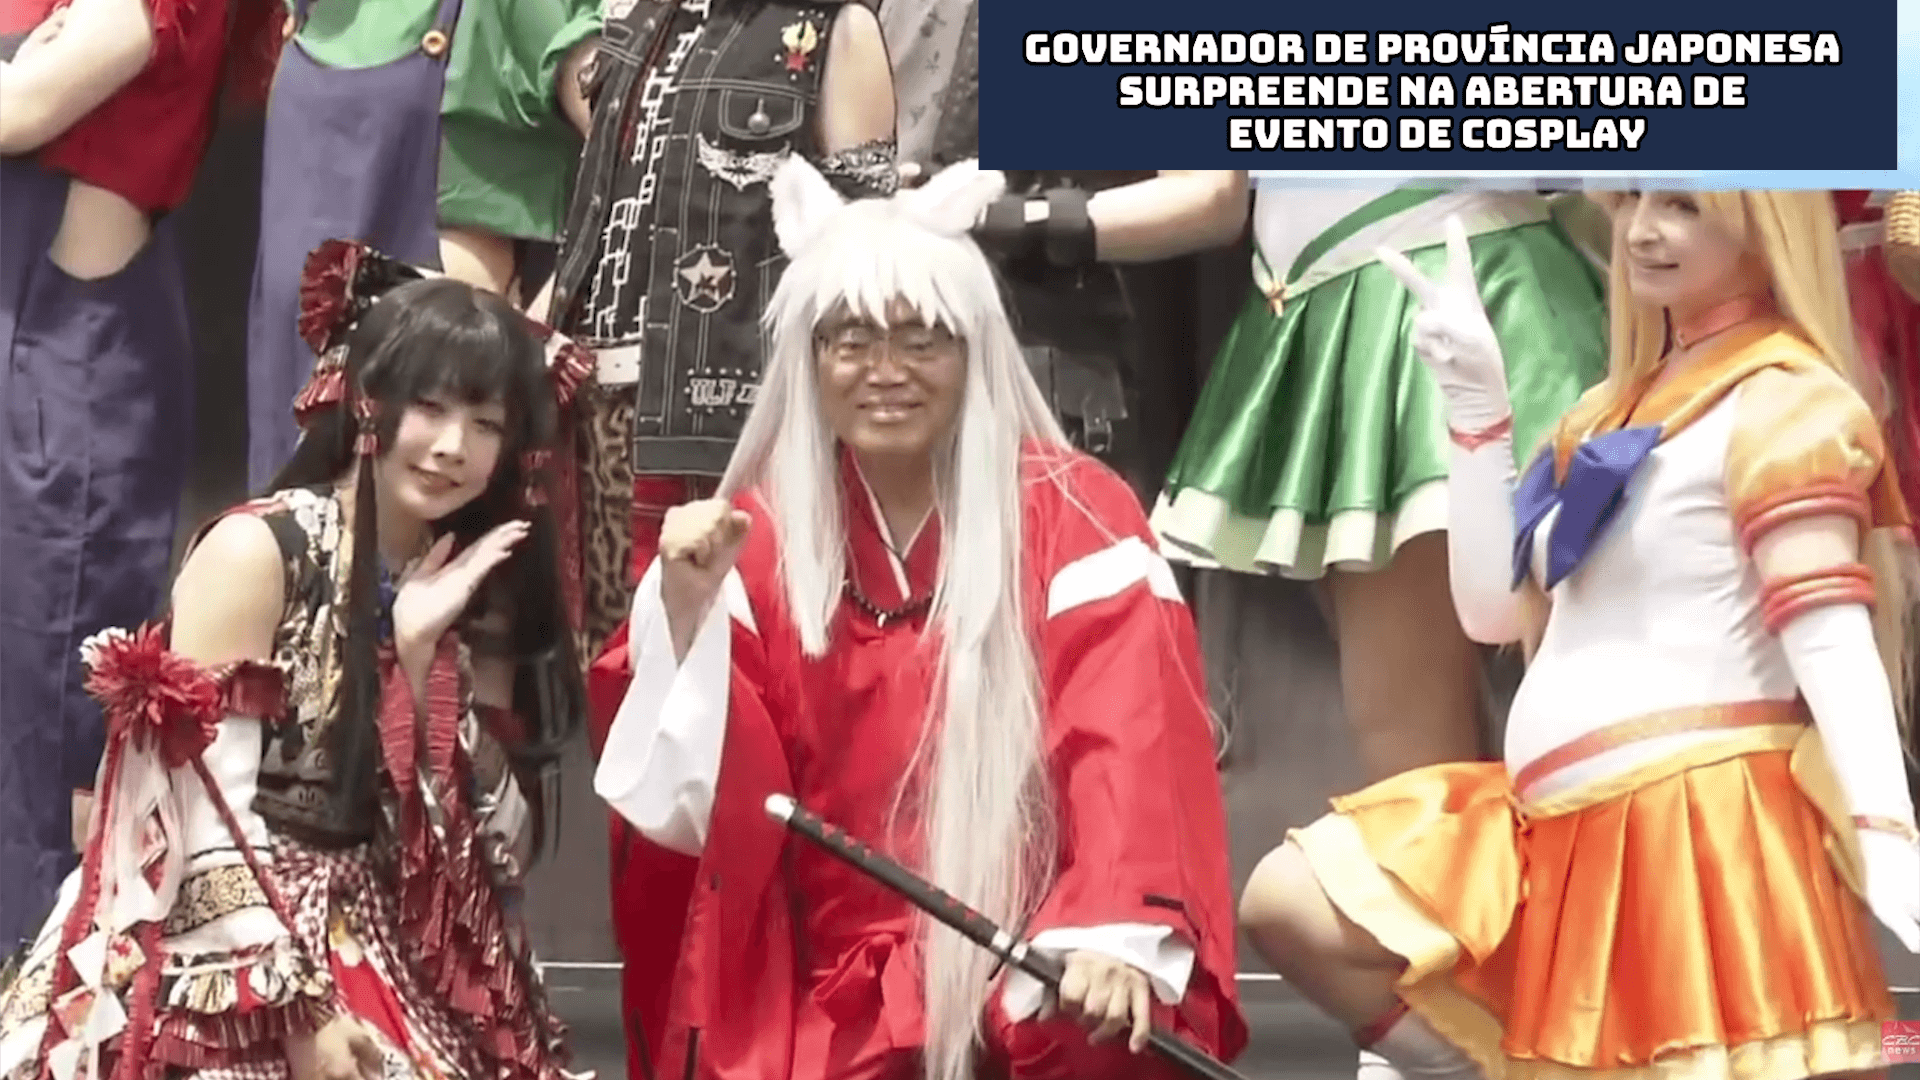 Governador de província japonesa surpreende na abertura de evento de Cosplay